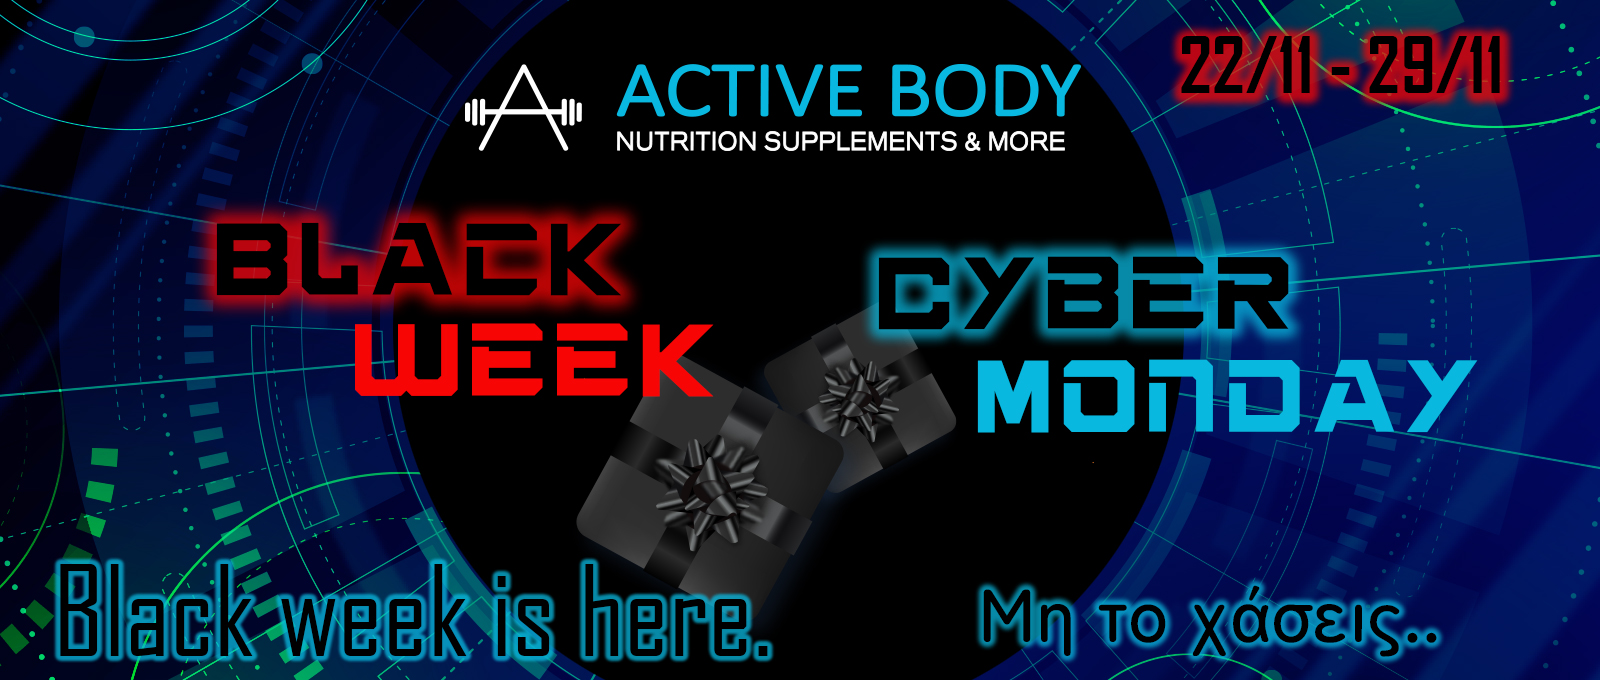 black week active body2